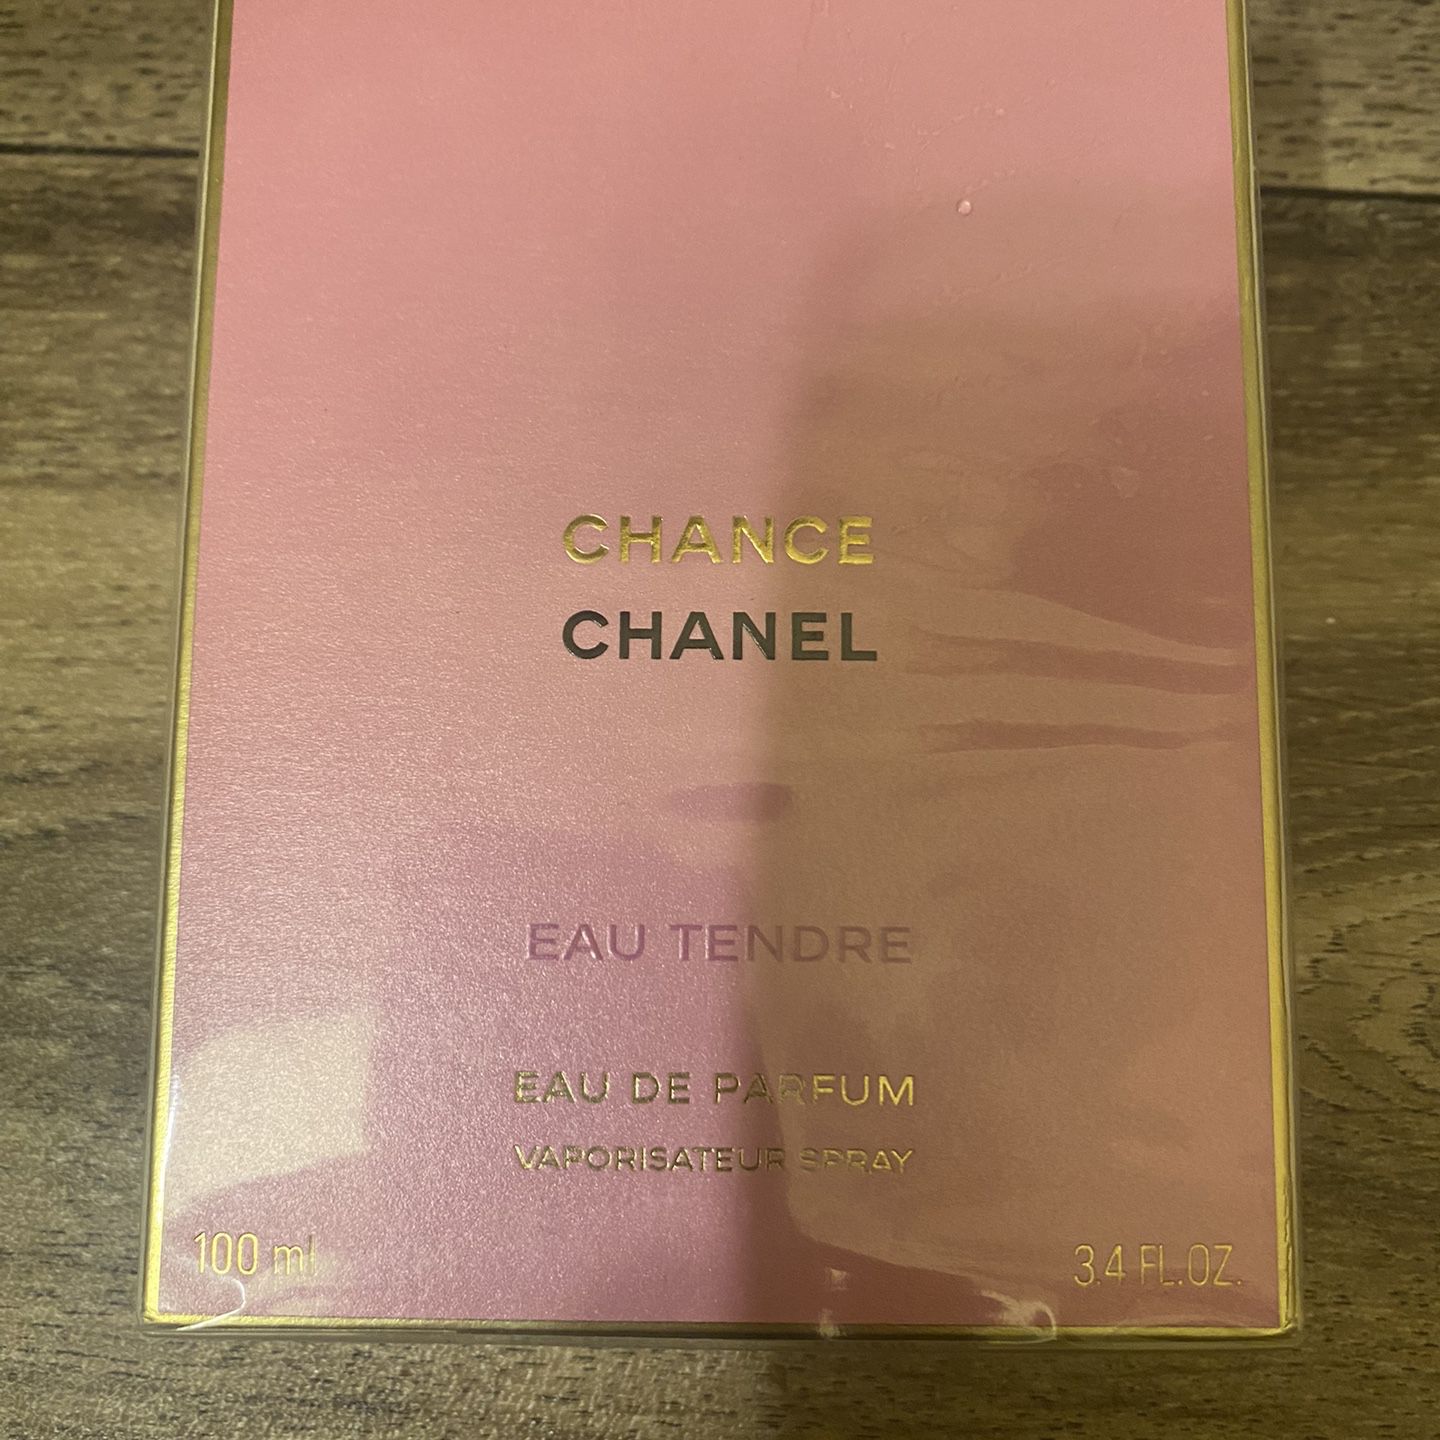 Chanel Chance Eau Tendre - Eau De Toilette Perfume 100ML NEW SEALED IN BOX  for Sale in Snohomish, WA - OfferUp